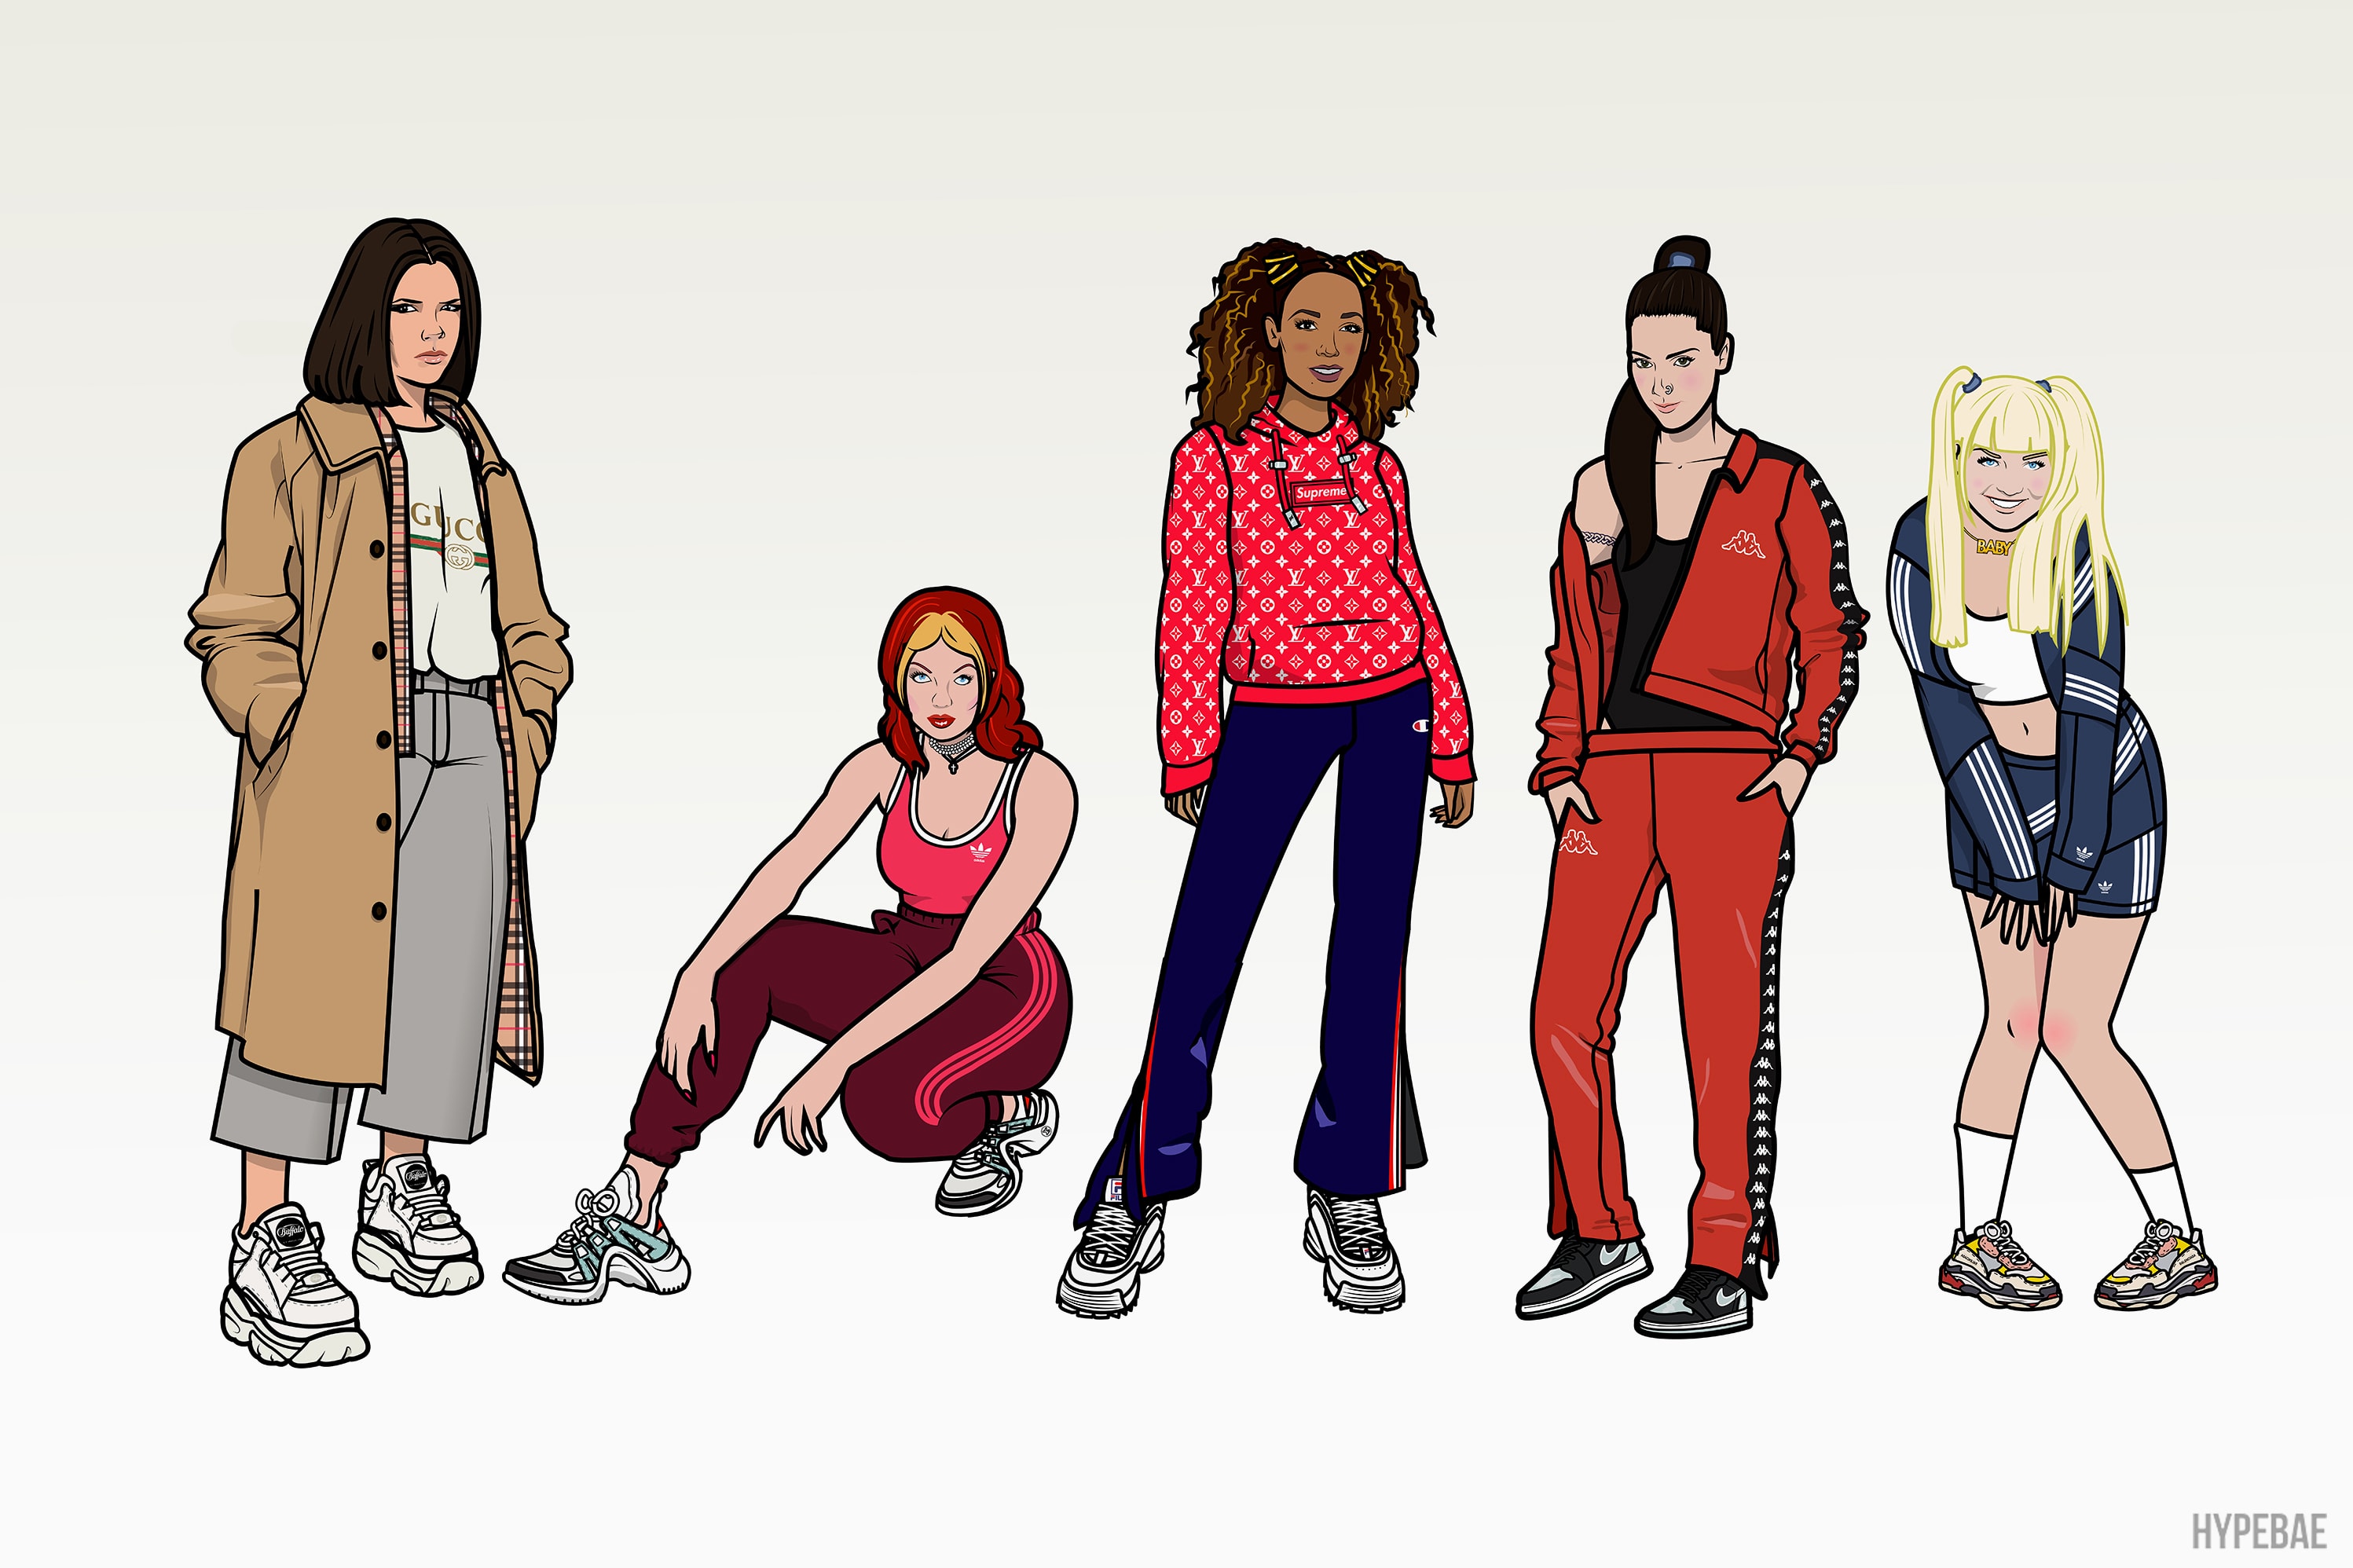 Spice Girls Streetwear Illustrations Nike adidas Originals Balenciaga Fila Gucci Louis Vuitton Victoria Beckham Mel C Mel B Geri Halliwell Emma Bunton